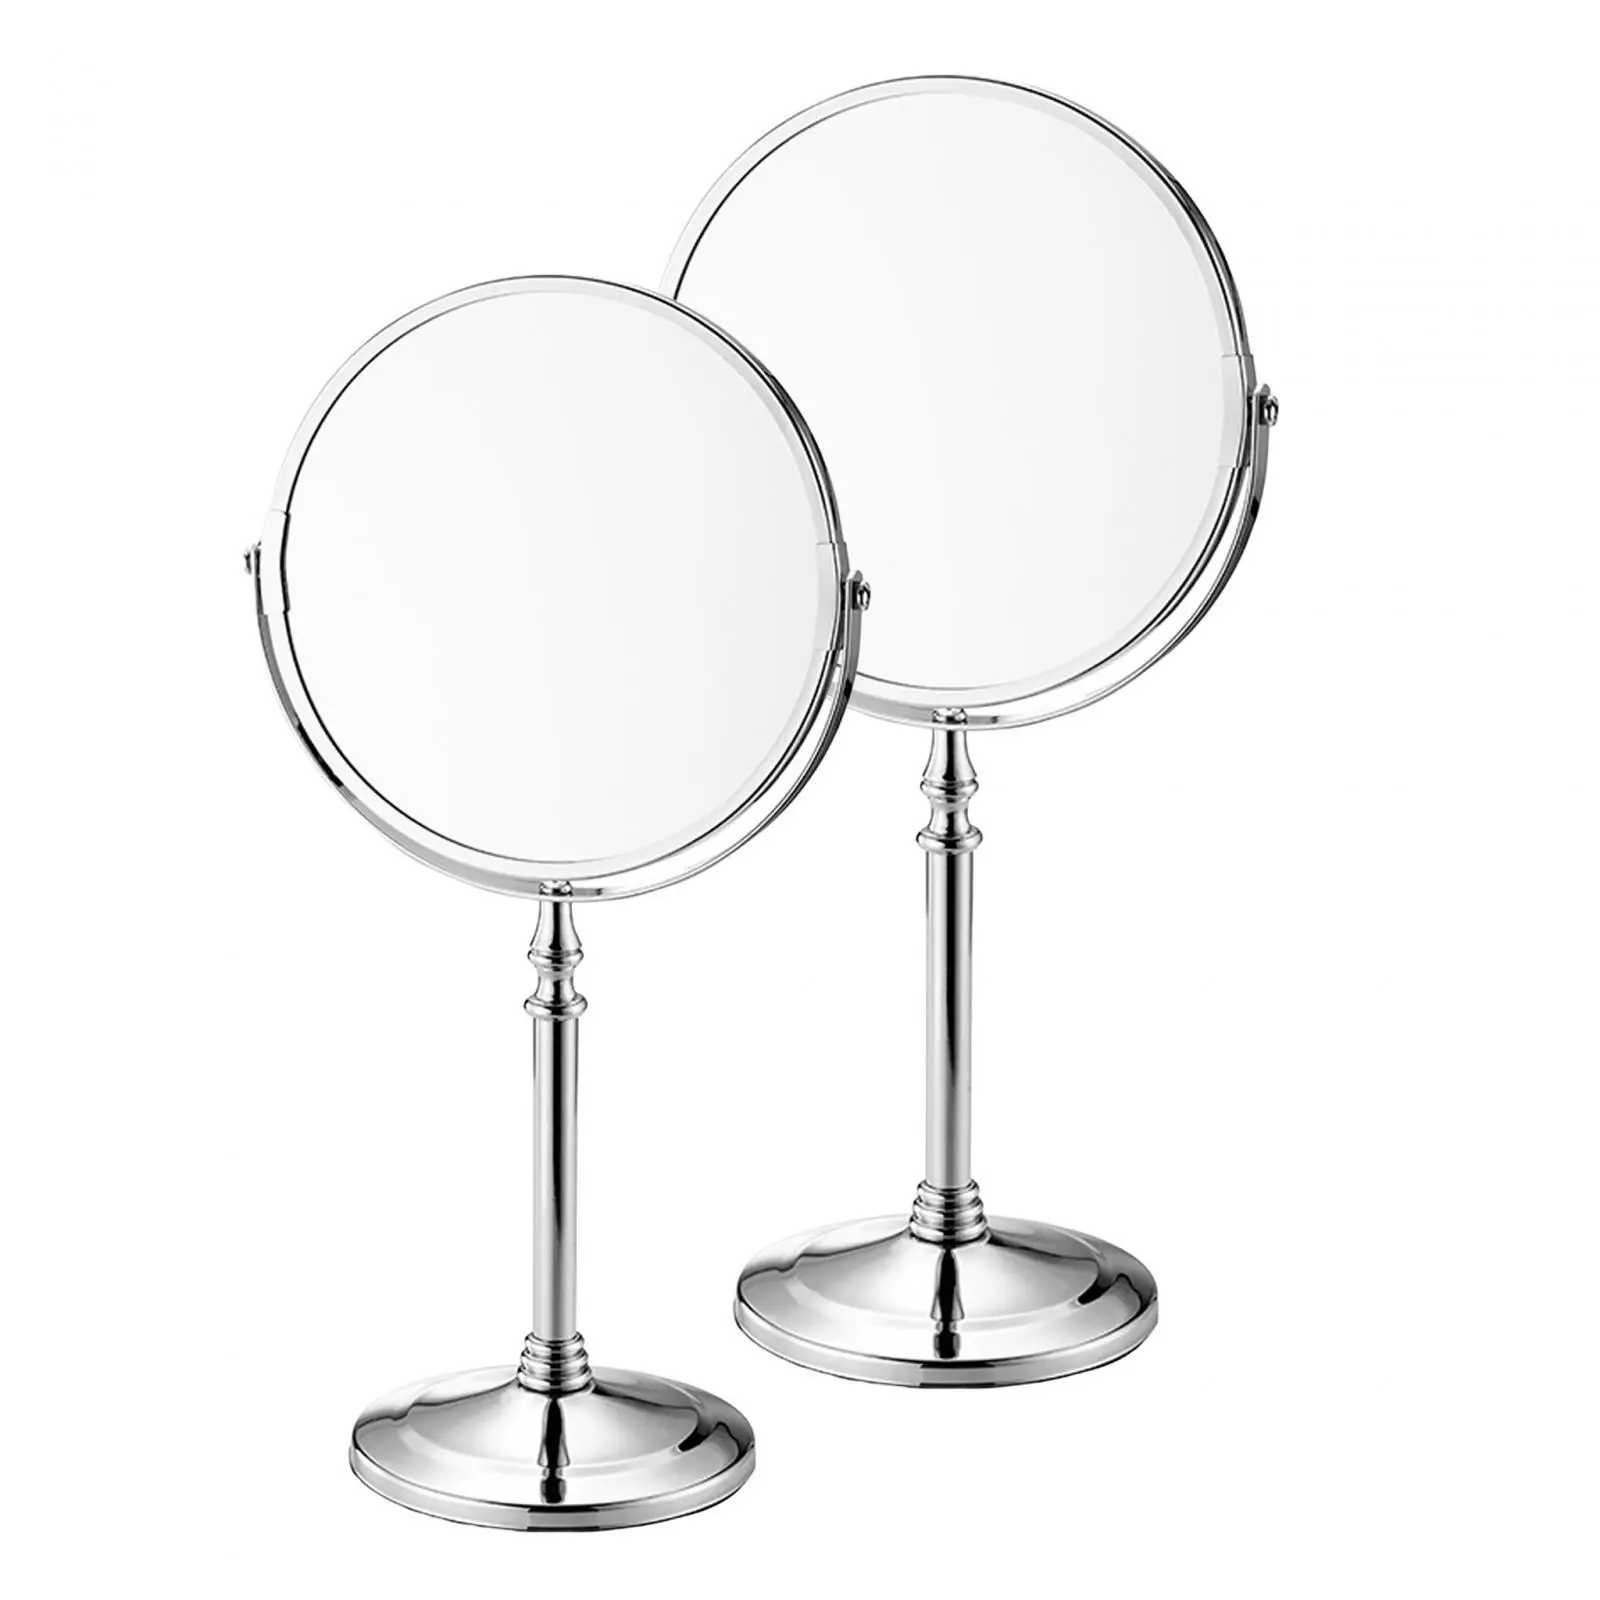 Makeup Mirror Decorative Round Vanity Makeup Mirror Tabletop Cosmetic Mirror for Home Dressing Table Bathroom Dresser Bedroom